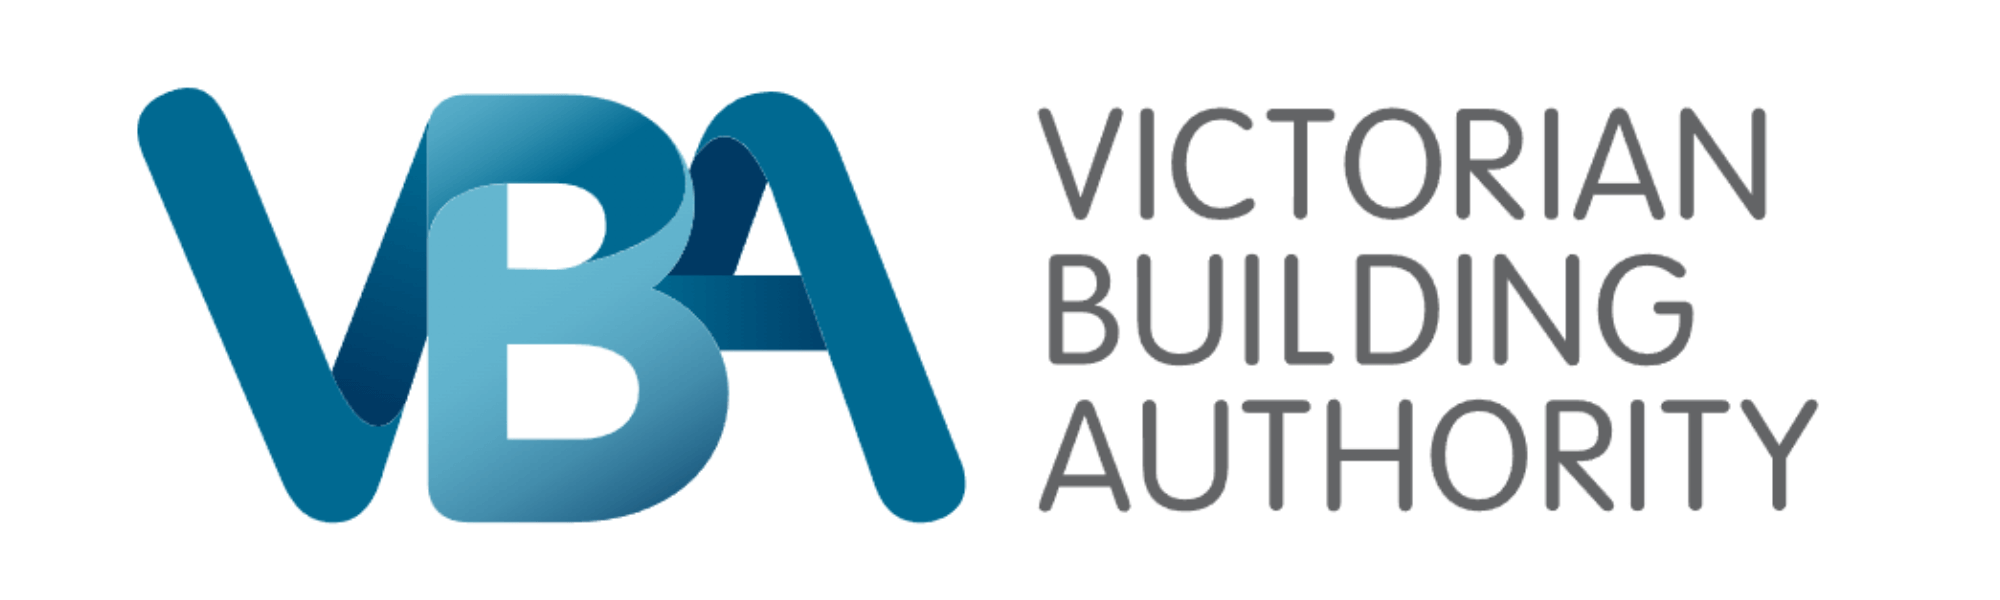 Victorian Building Authority, VBA